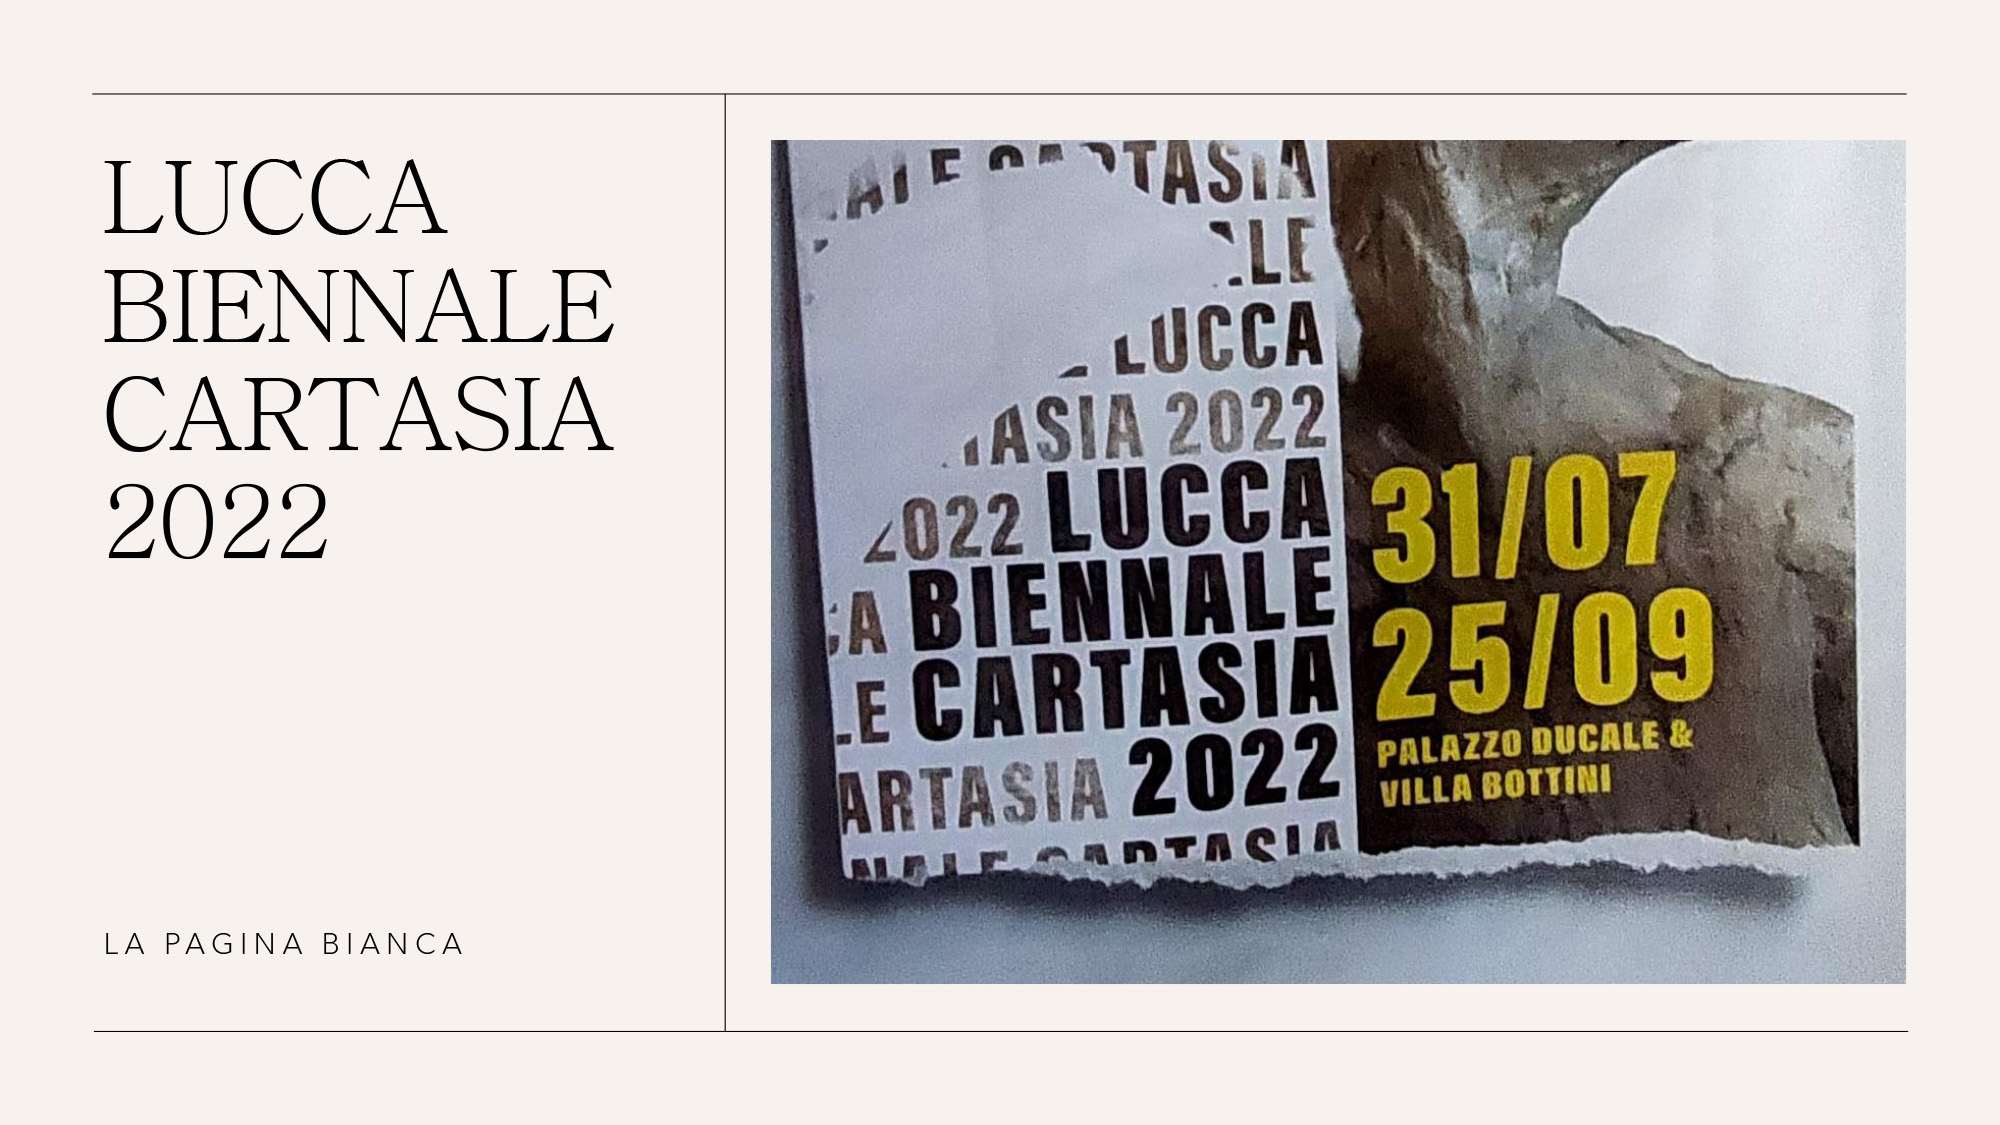 Lubica - Lucca Biennale Cartasia 2022